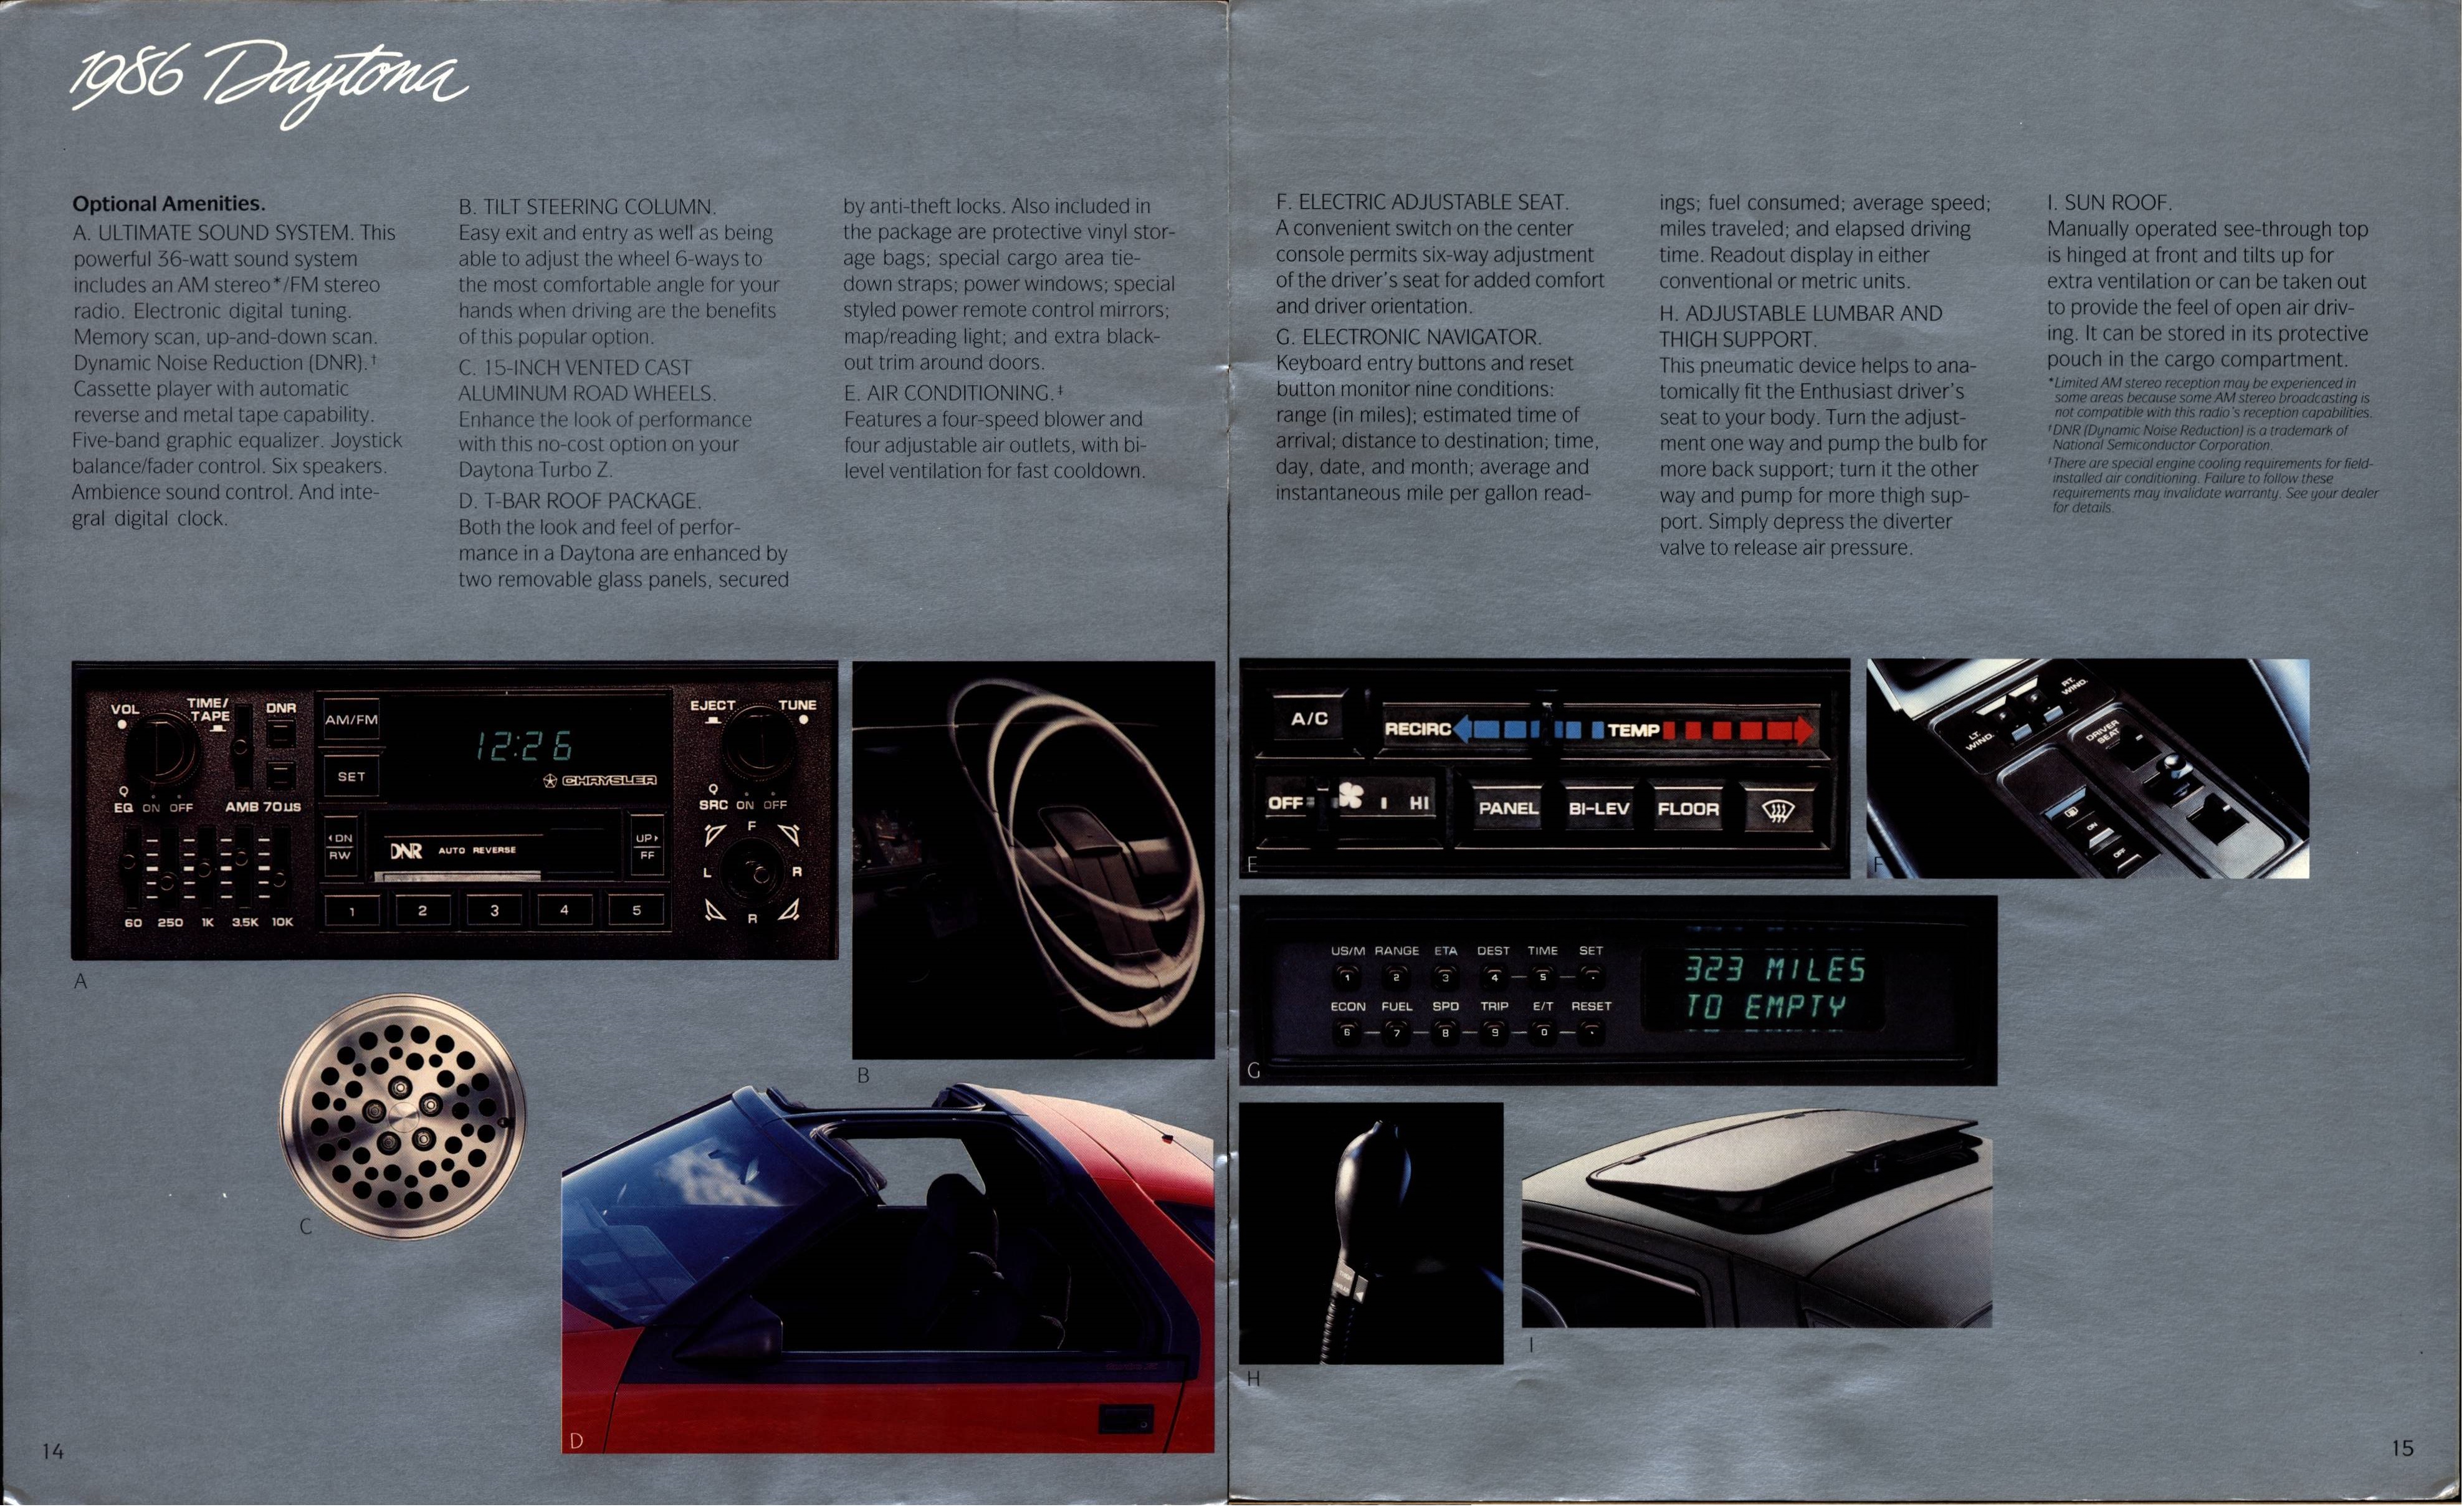 1986 Dodge Daytona Brochure 14-15